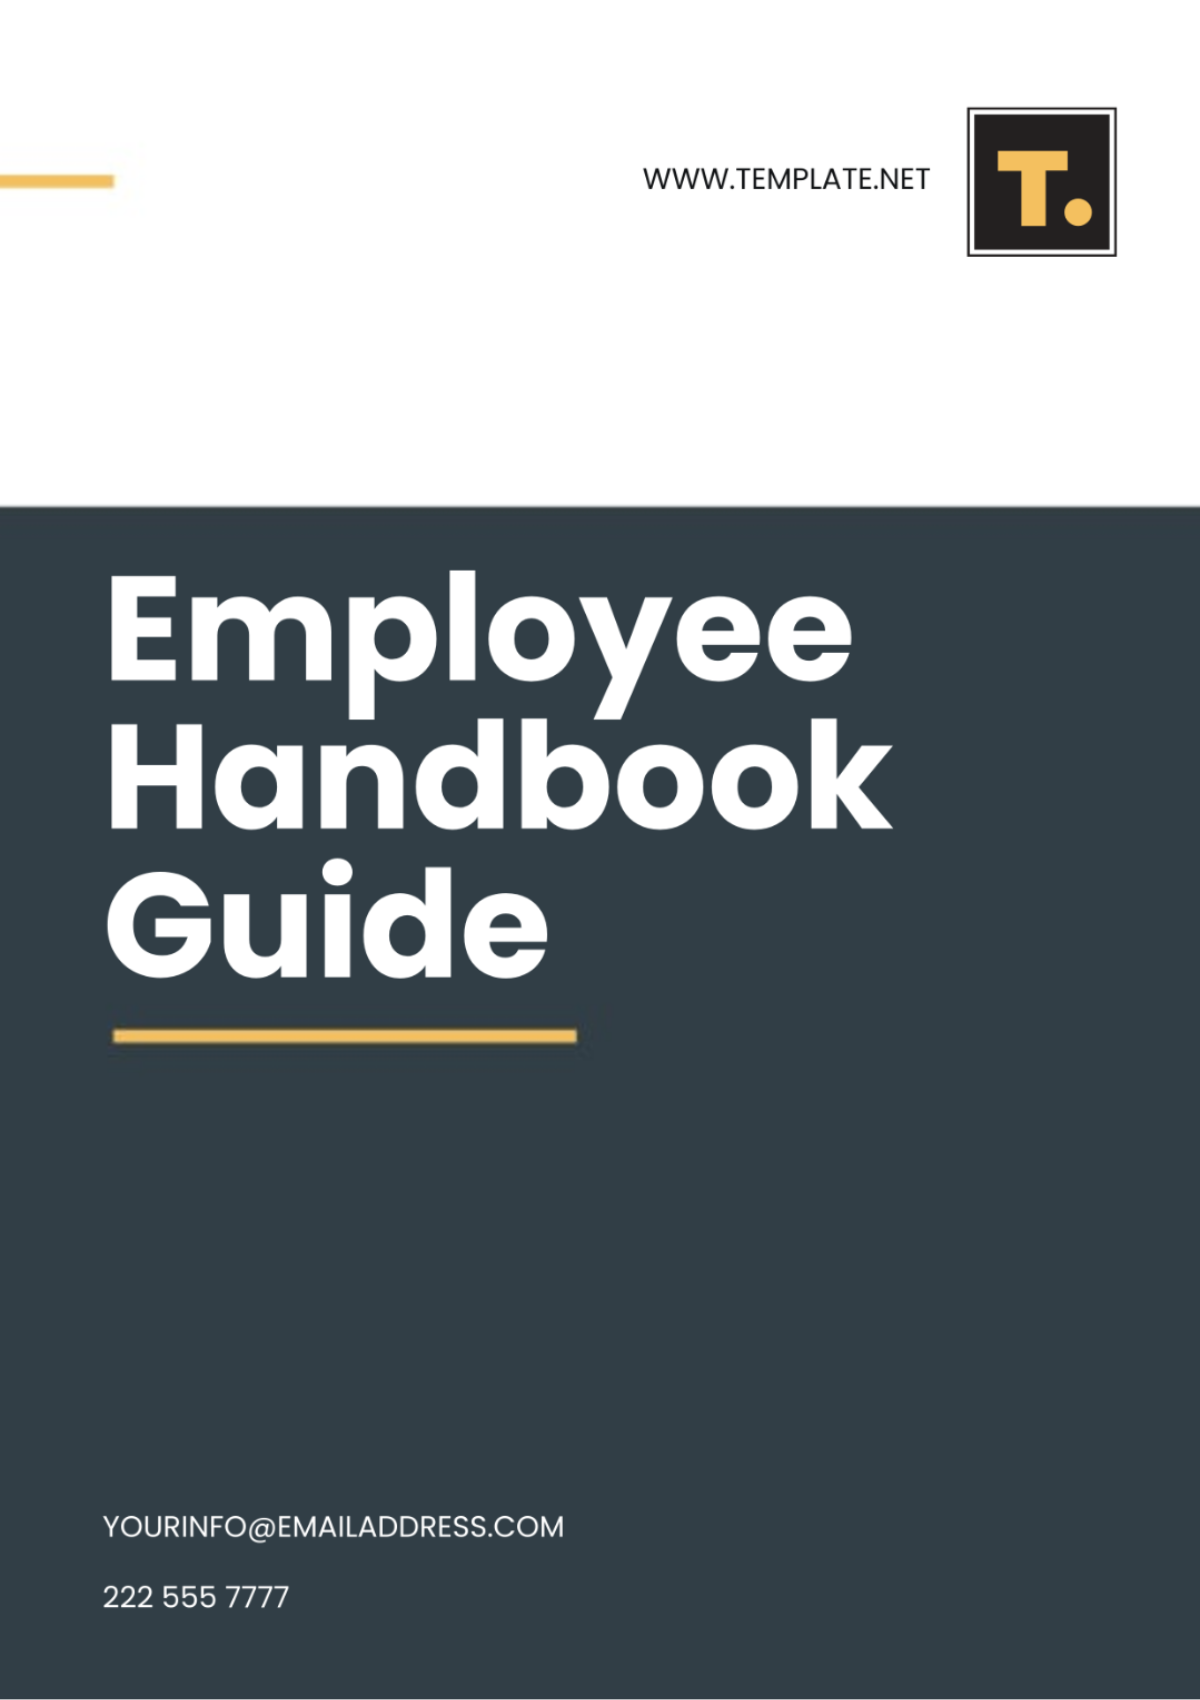 Free Employee Handbook Guide Template